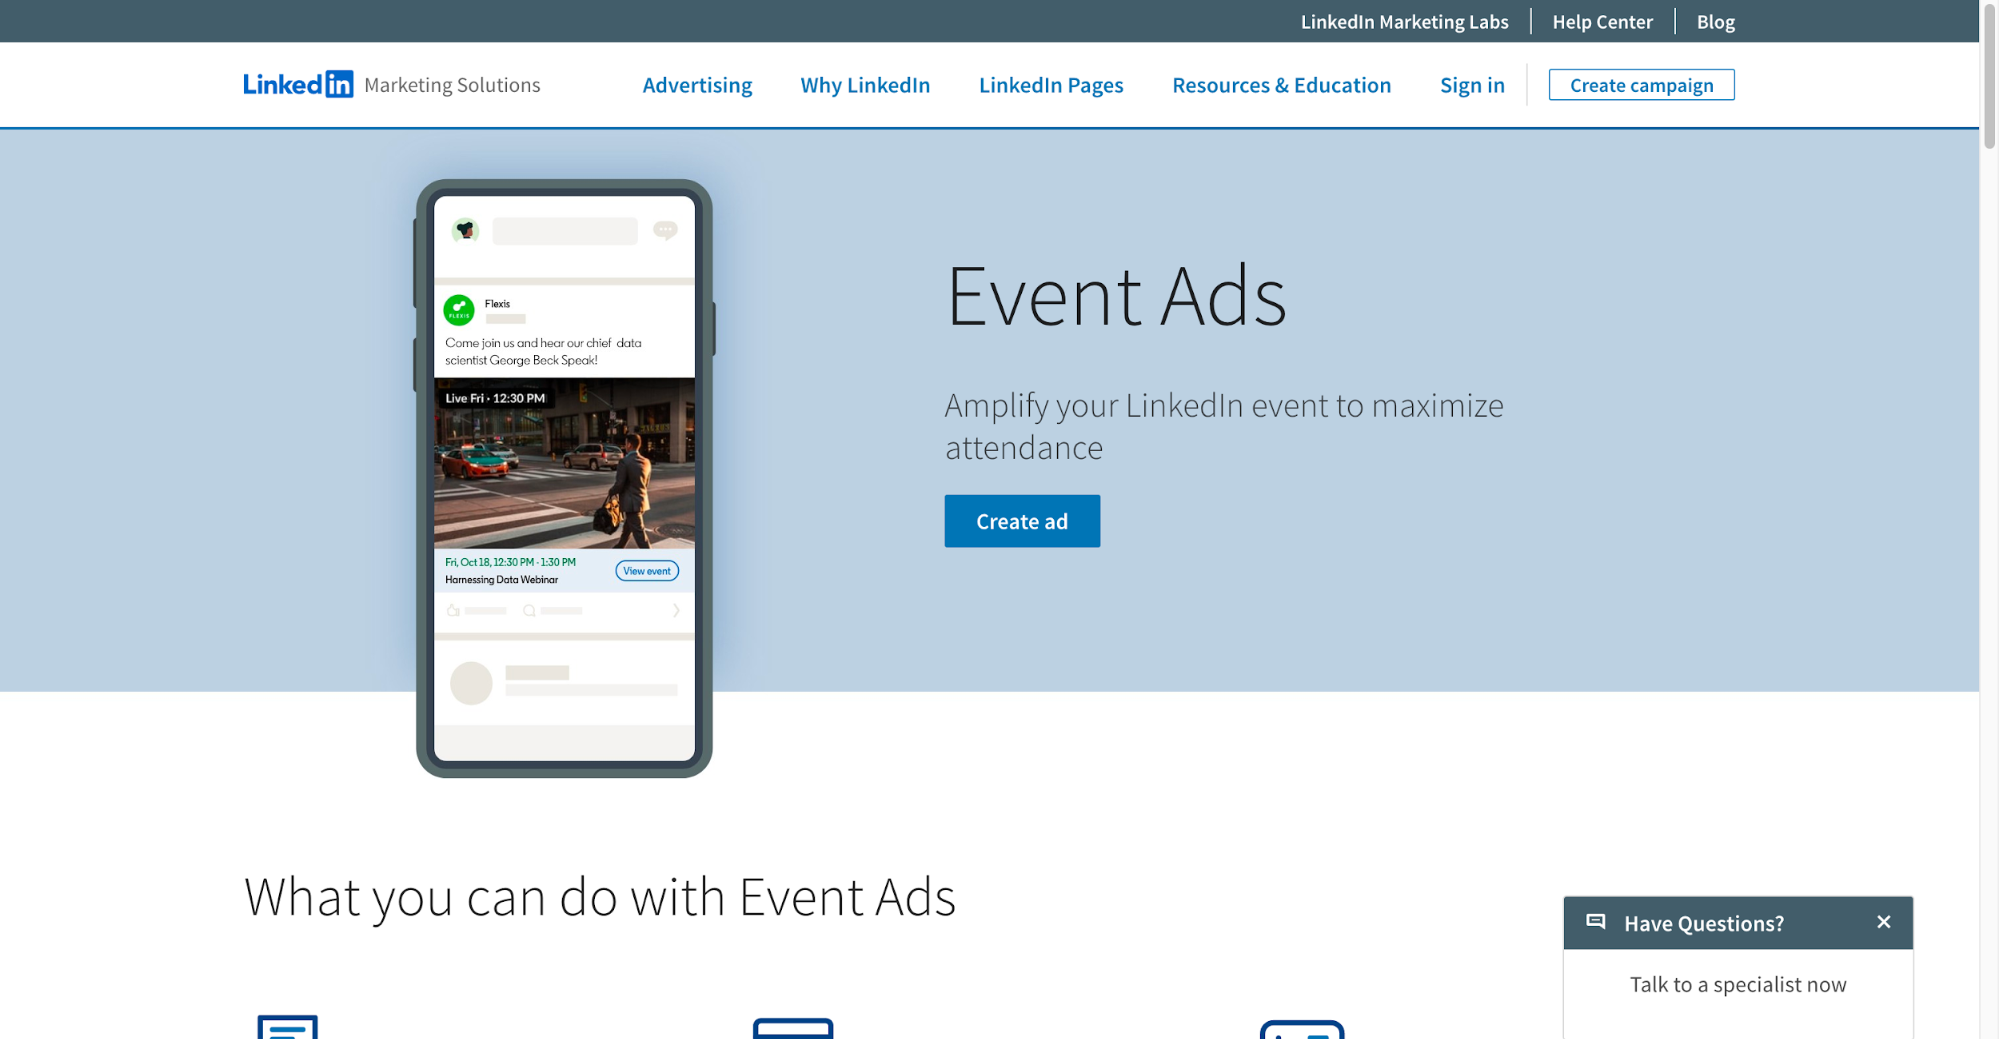 linkedin event ads web page